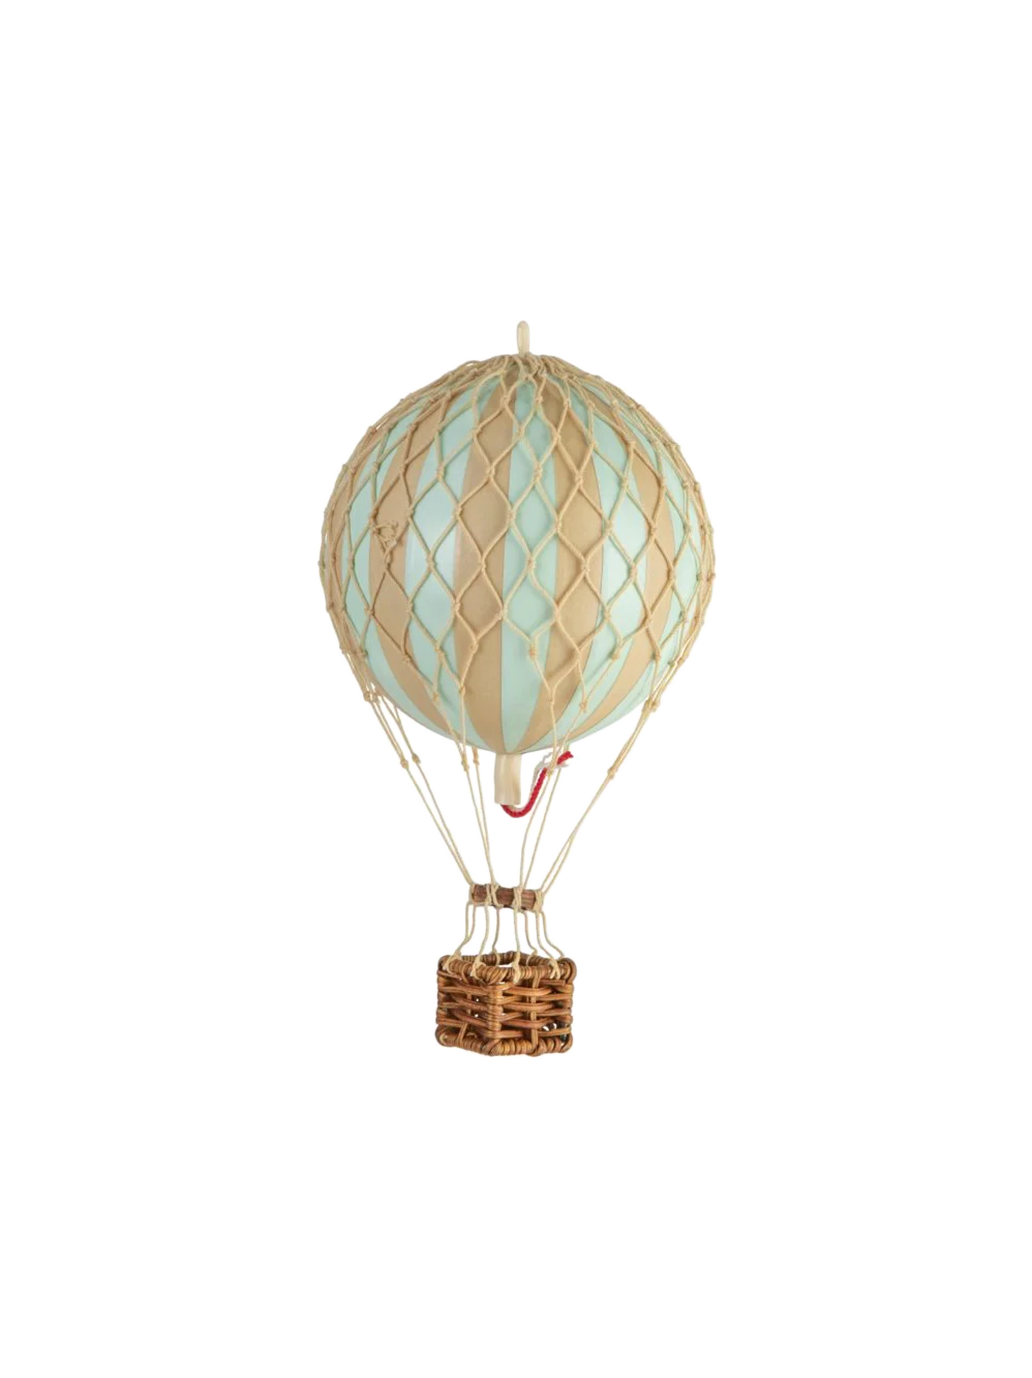 Decorative Hot Air Balloon Mobile